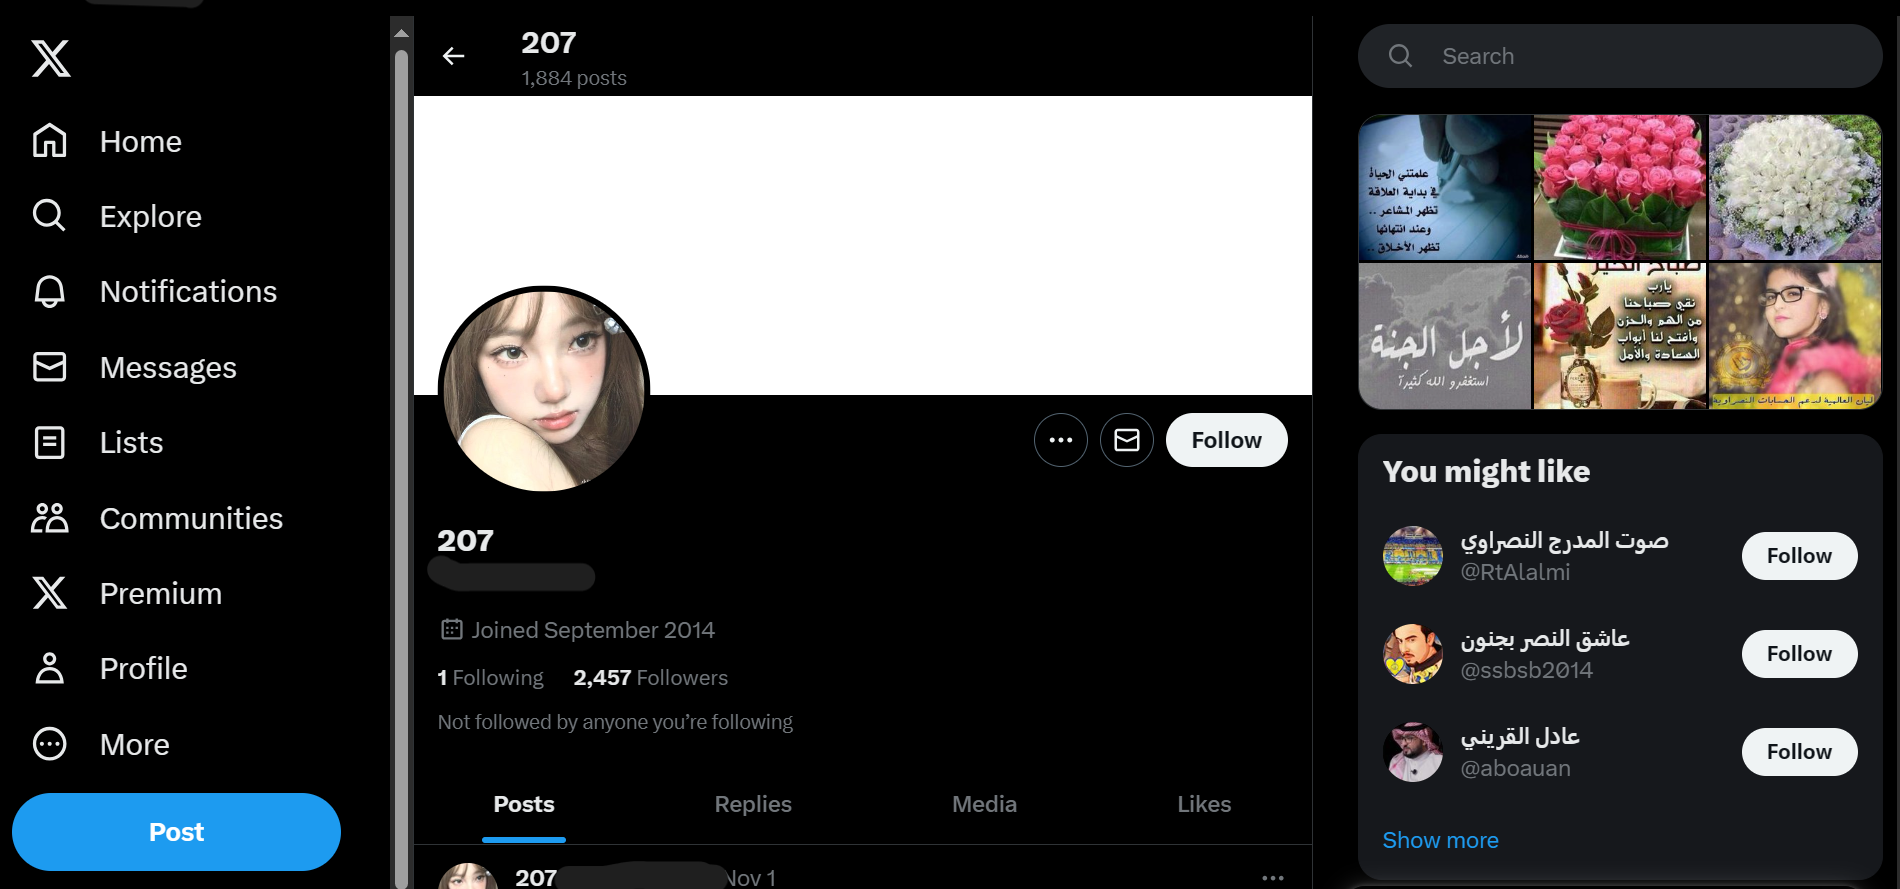 Aged 2014 2.4k Followers Twitter Account